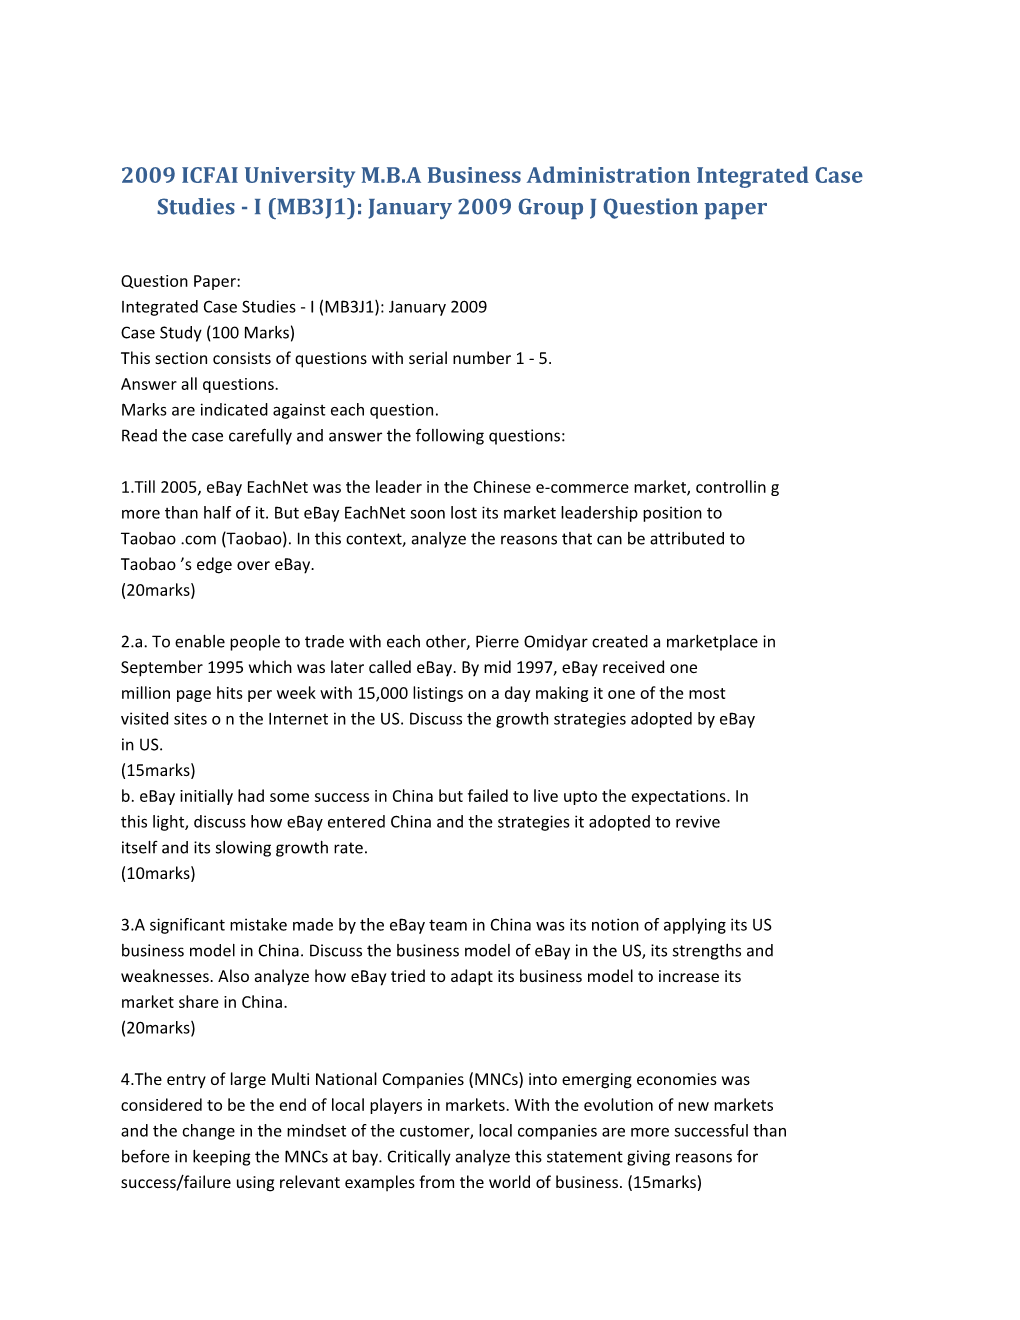 2009 ICFAI University M.B.A Business Administration Integrated Case Studies - I (MB3J1)